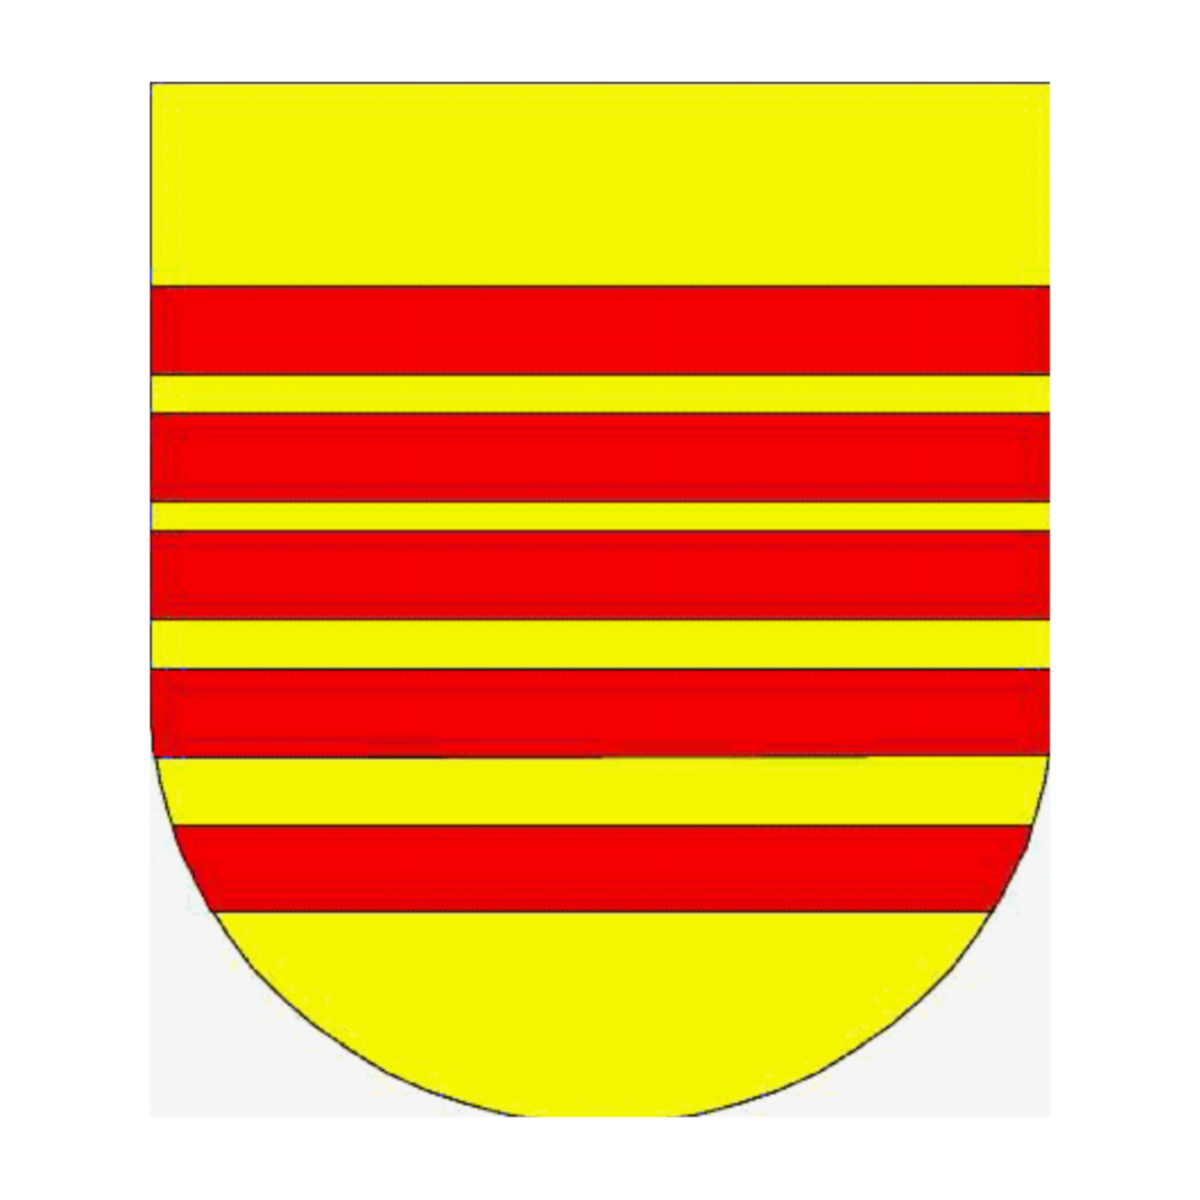 Coat of arms of familyOzores